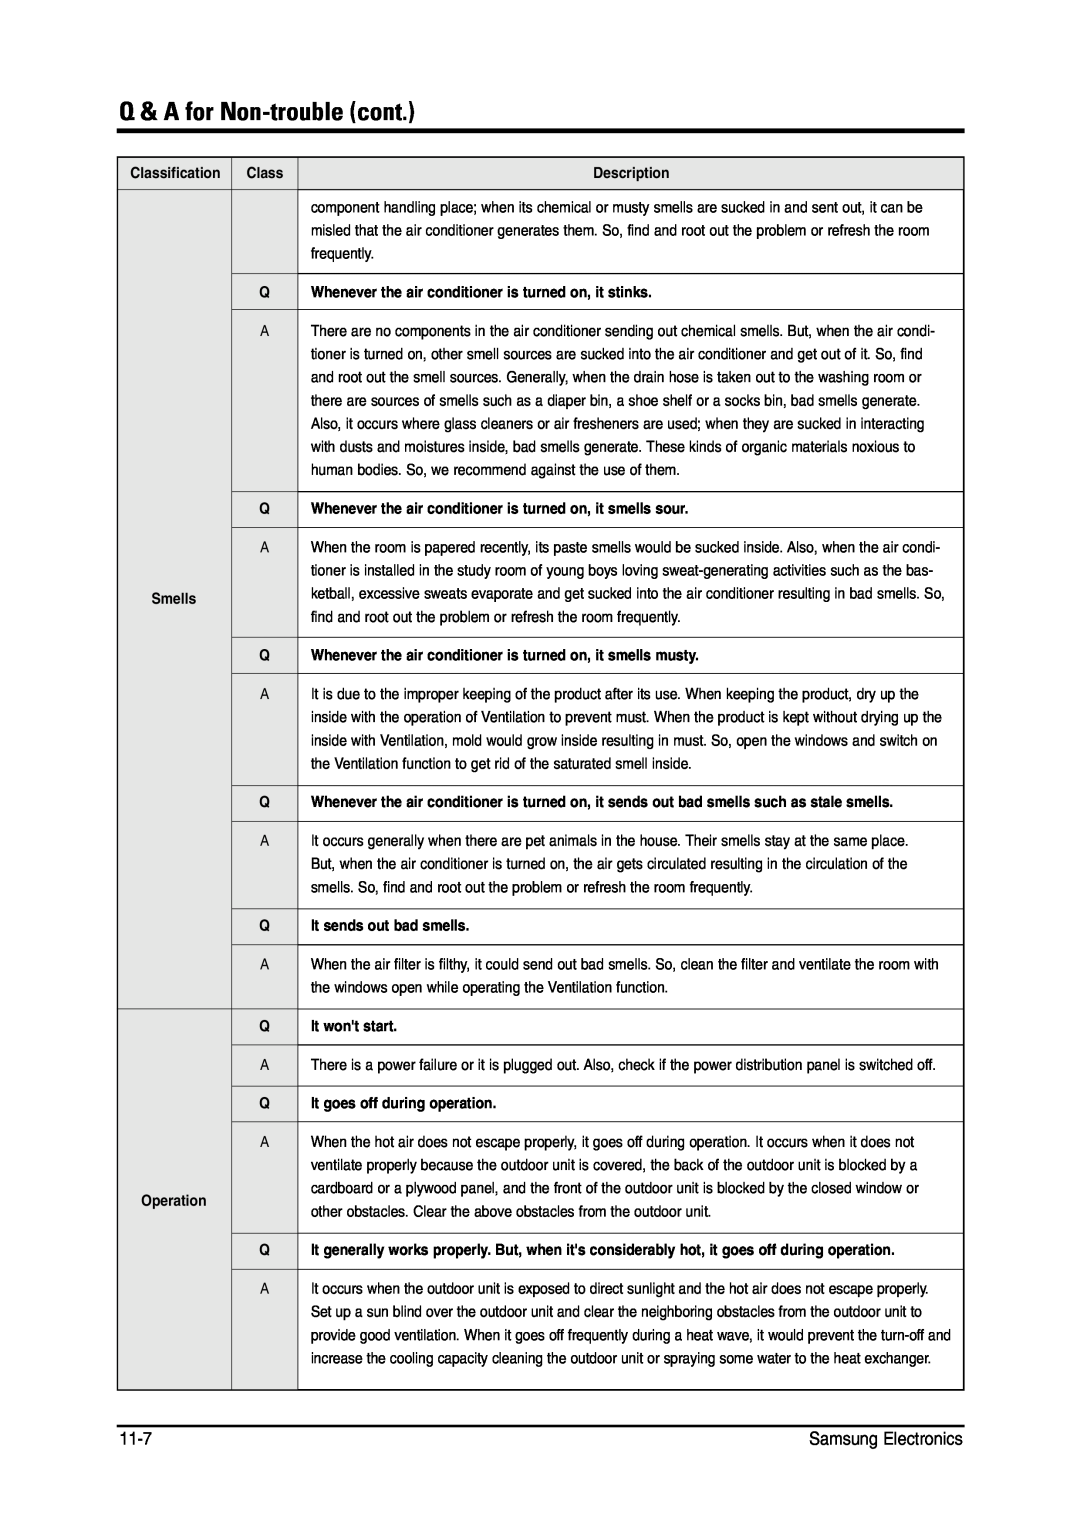 Samsung MH026FNCA service manual Q & A for Non-troublecont 